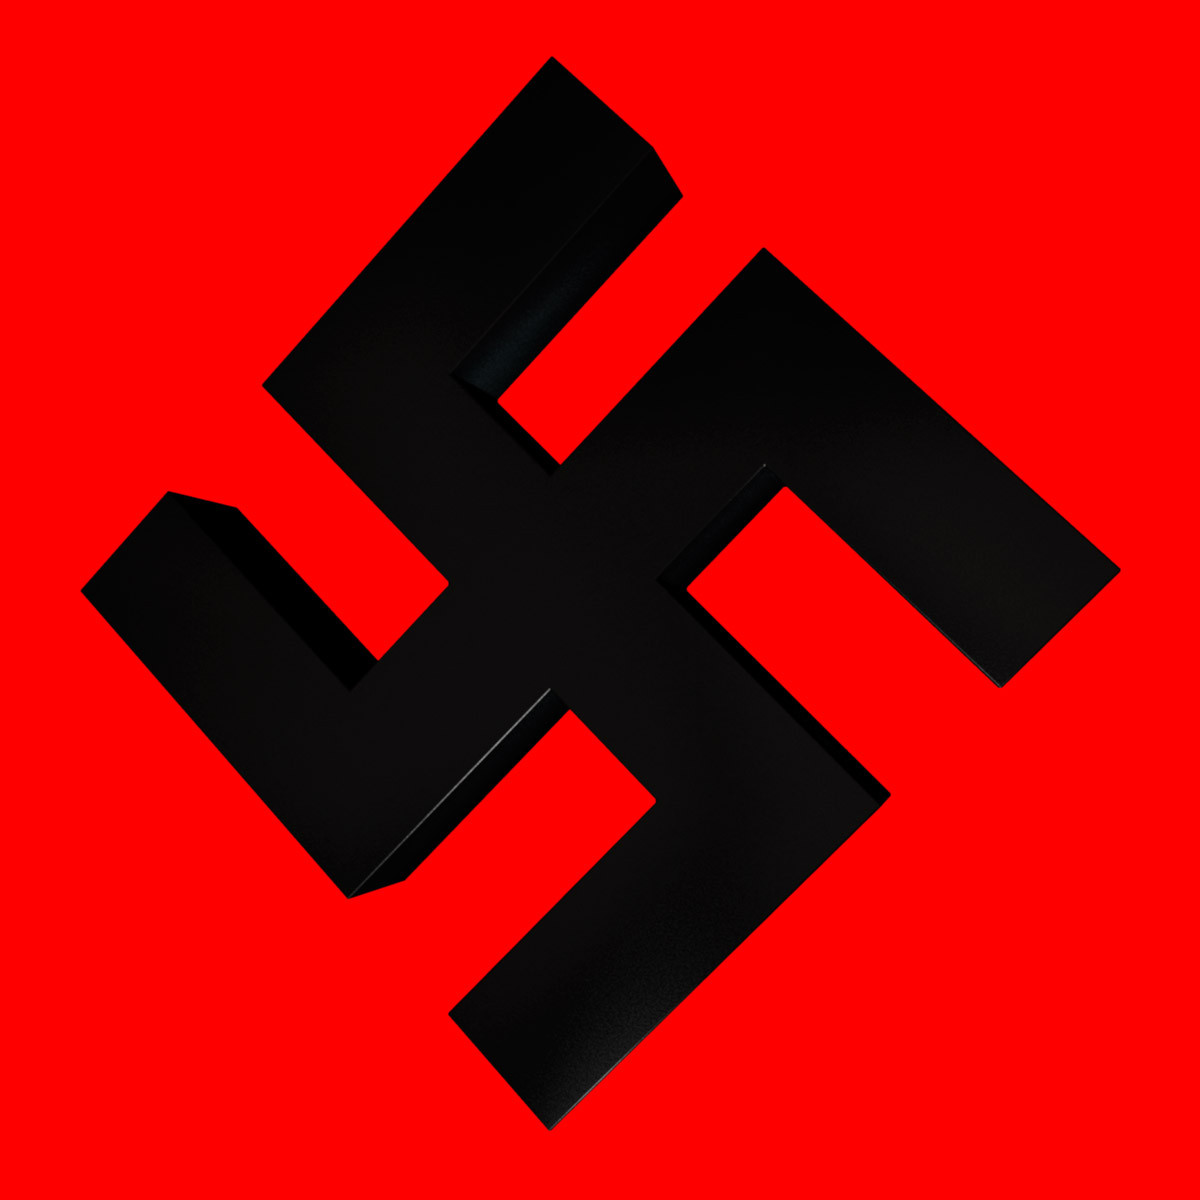 Символ зиги. Символ фашистской свастики.